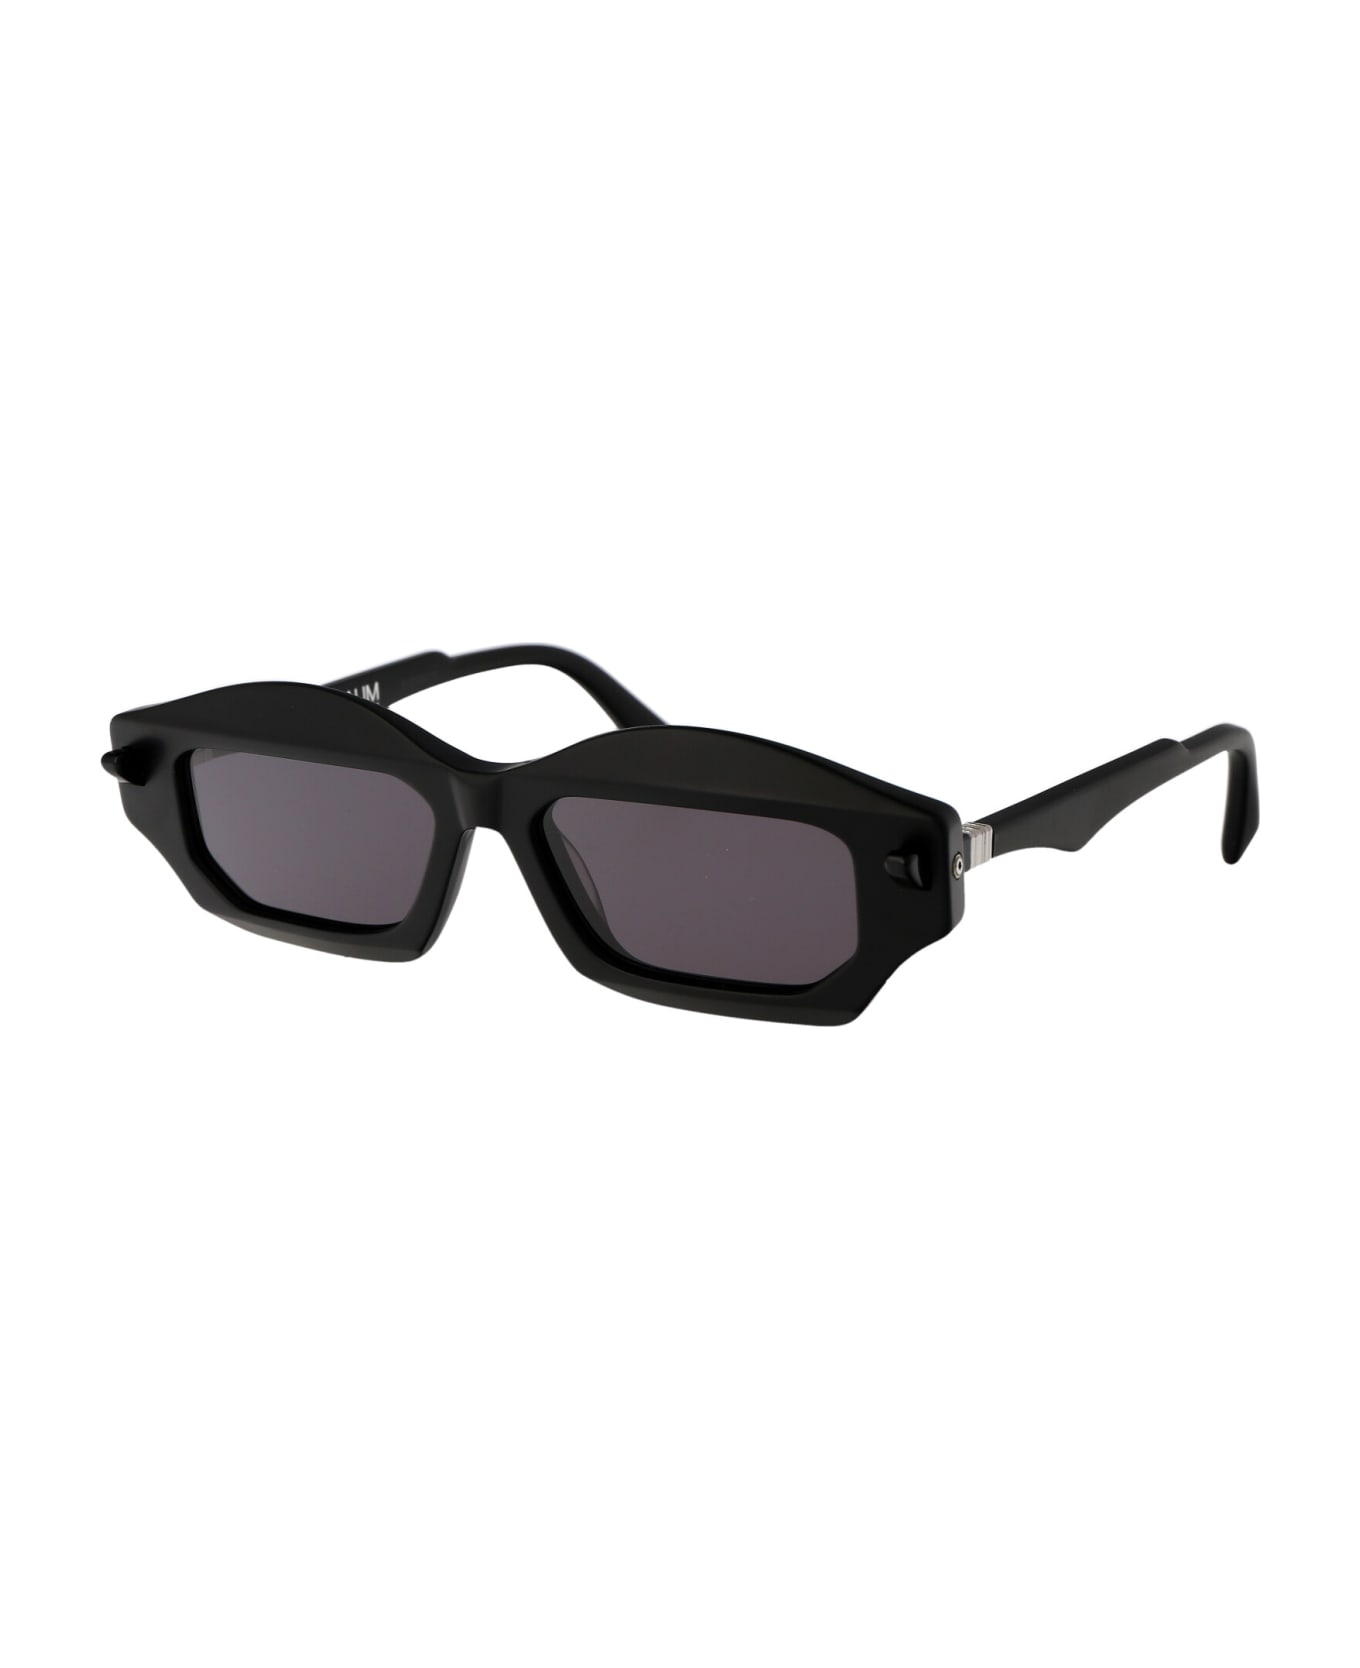 Kuboraum Maske Q6 Sunglasses - BMM black サングラス